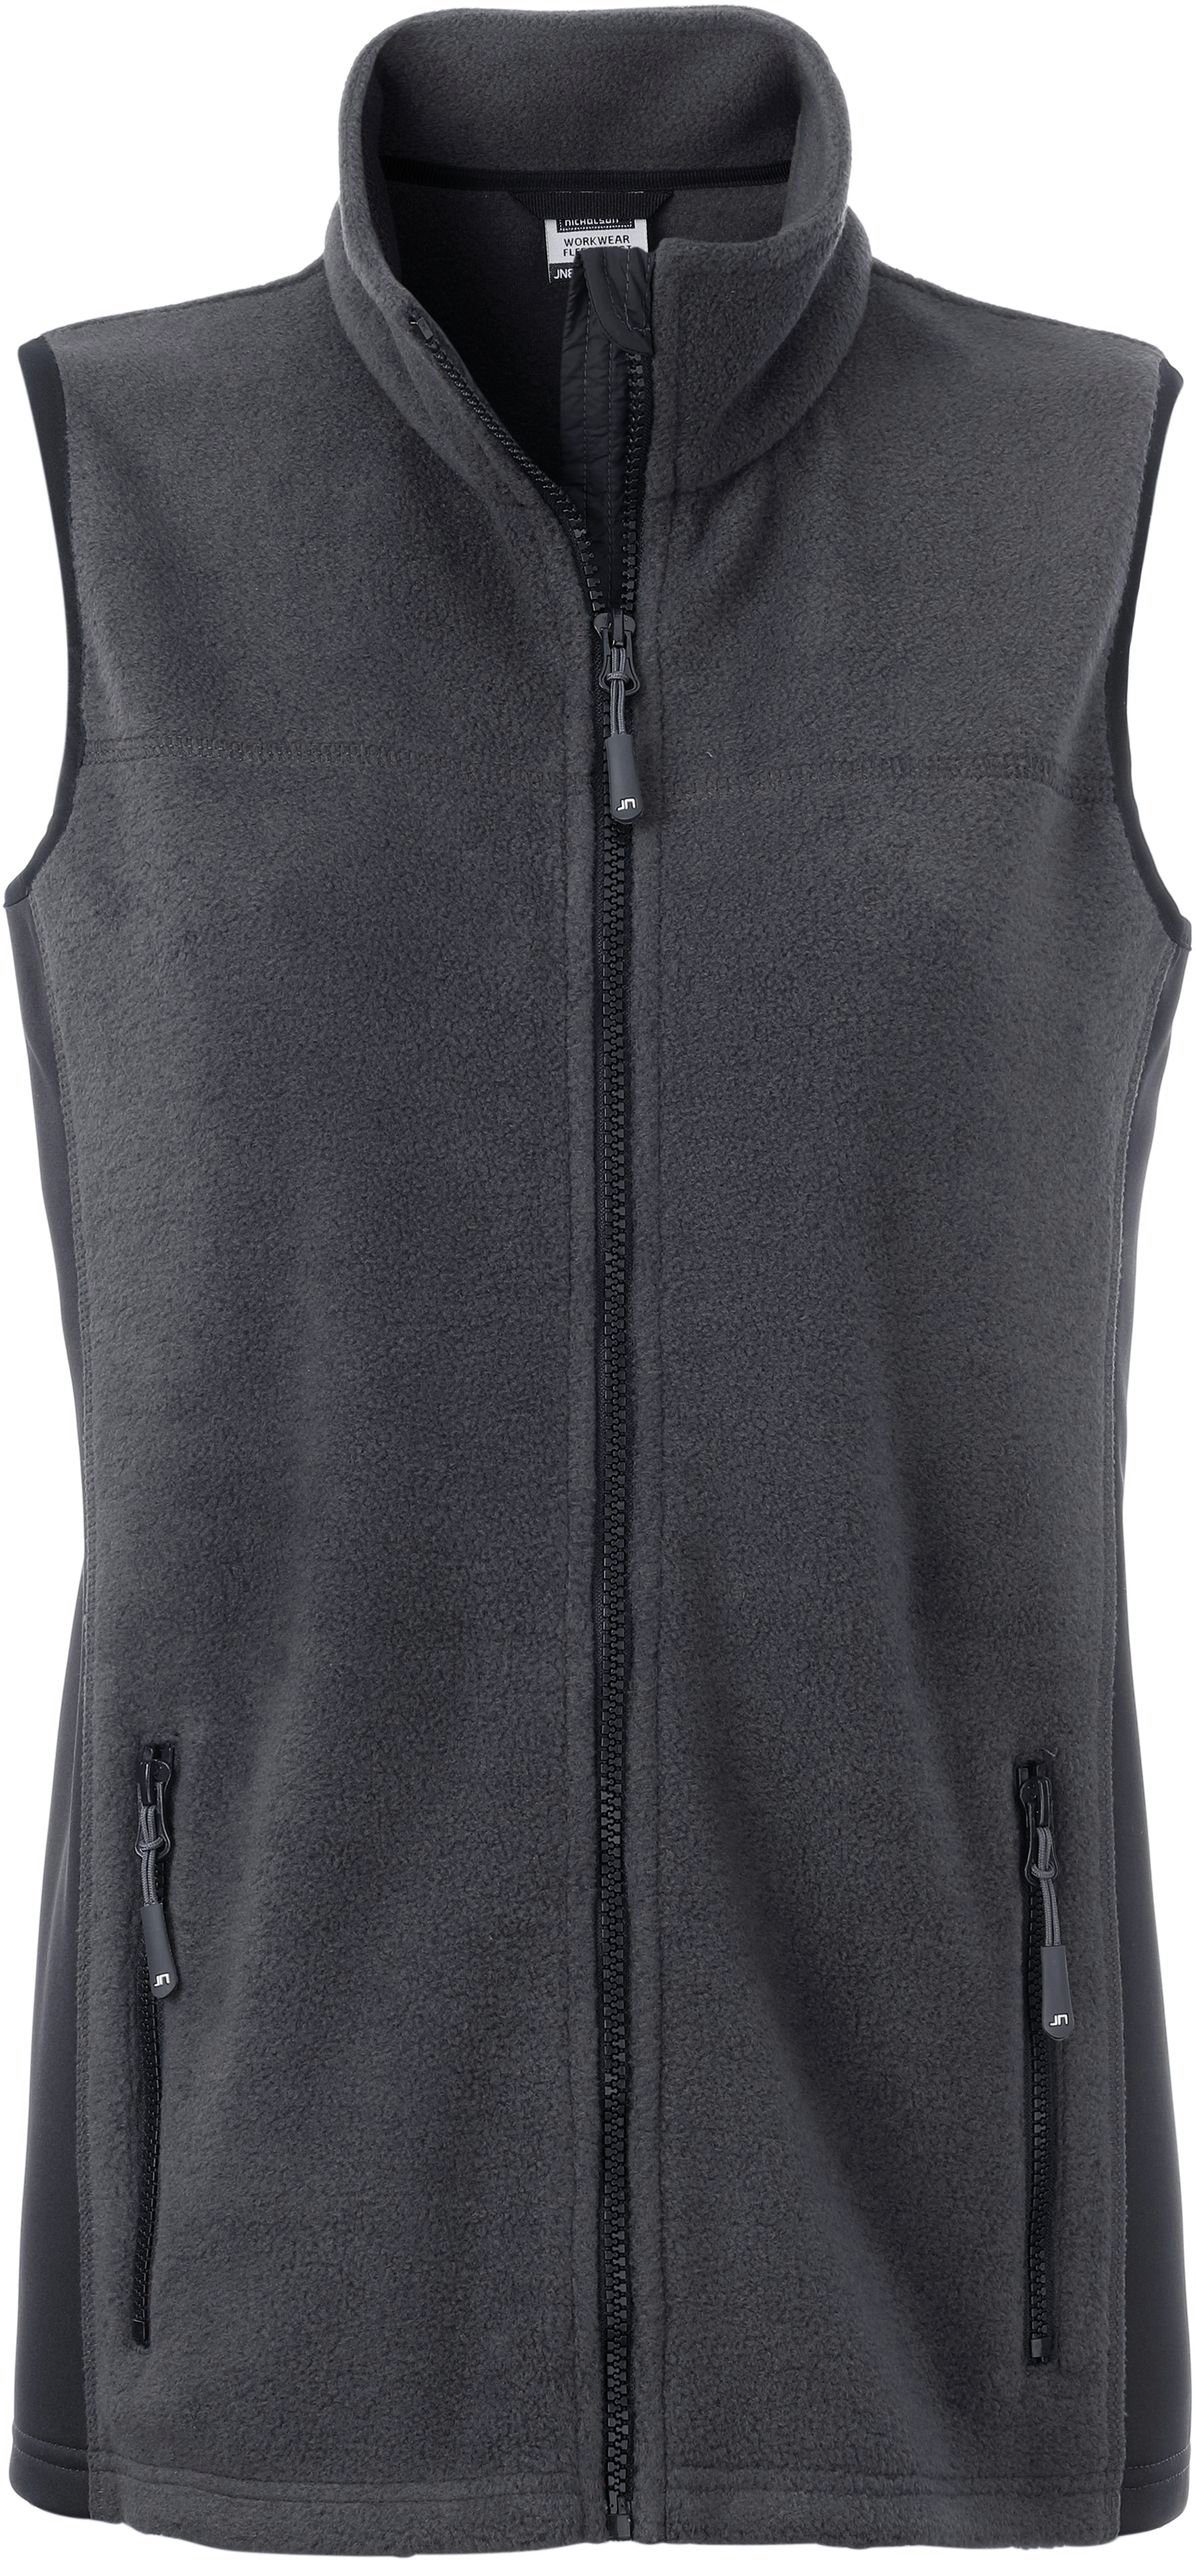 James & Nicholson Weste Gilet Workwear carbon/black Fleeceweste Fleece FaS50855